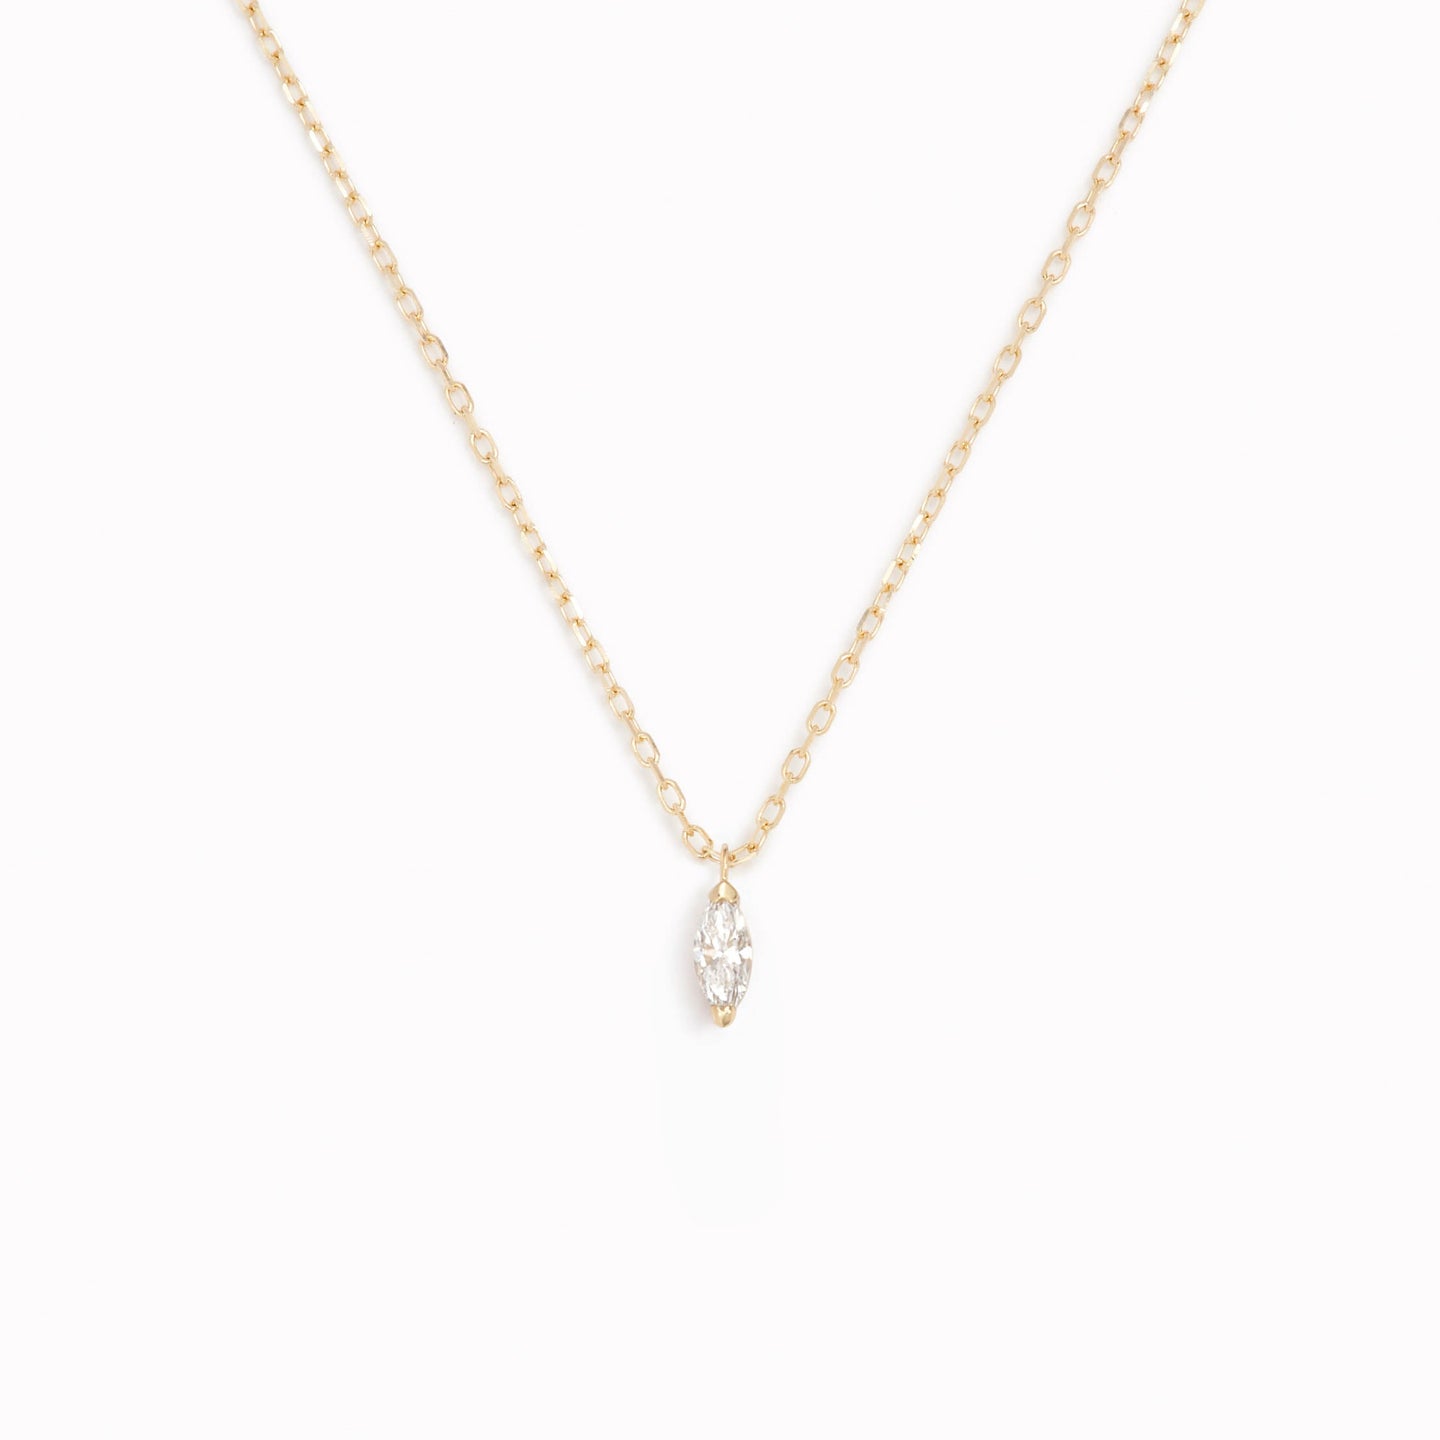 Marquise Diamond Necklace 14k Gold - Aletta